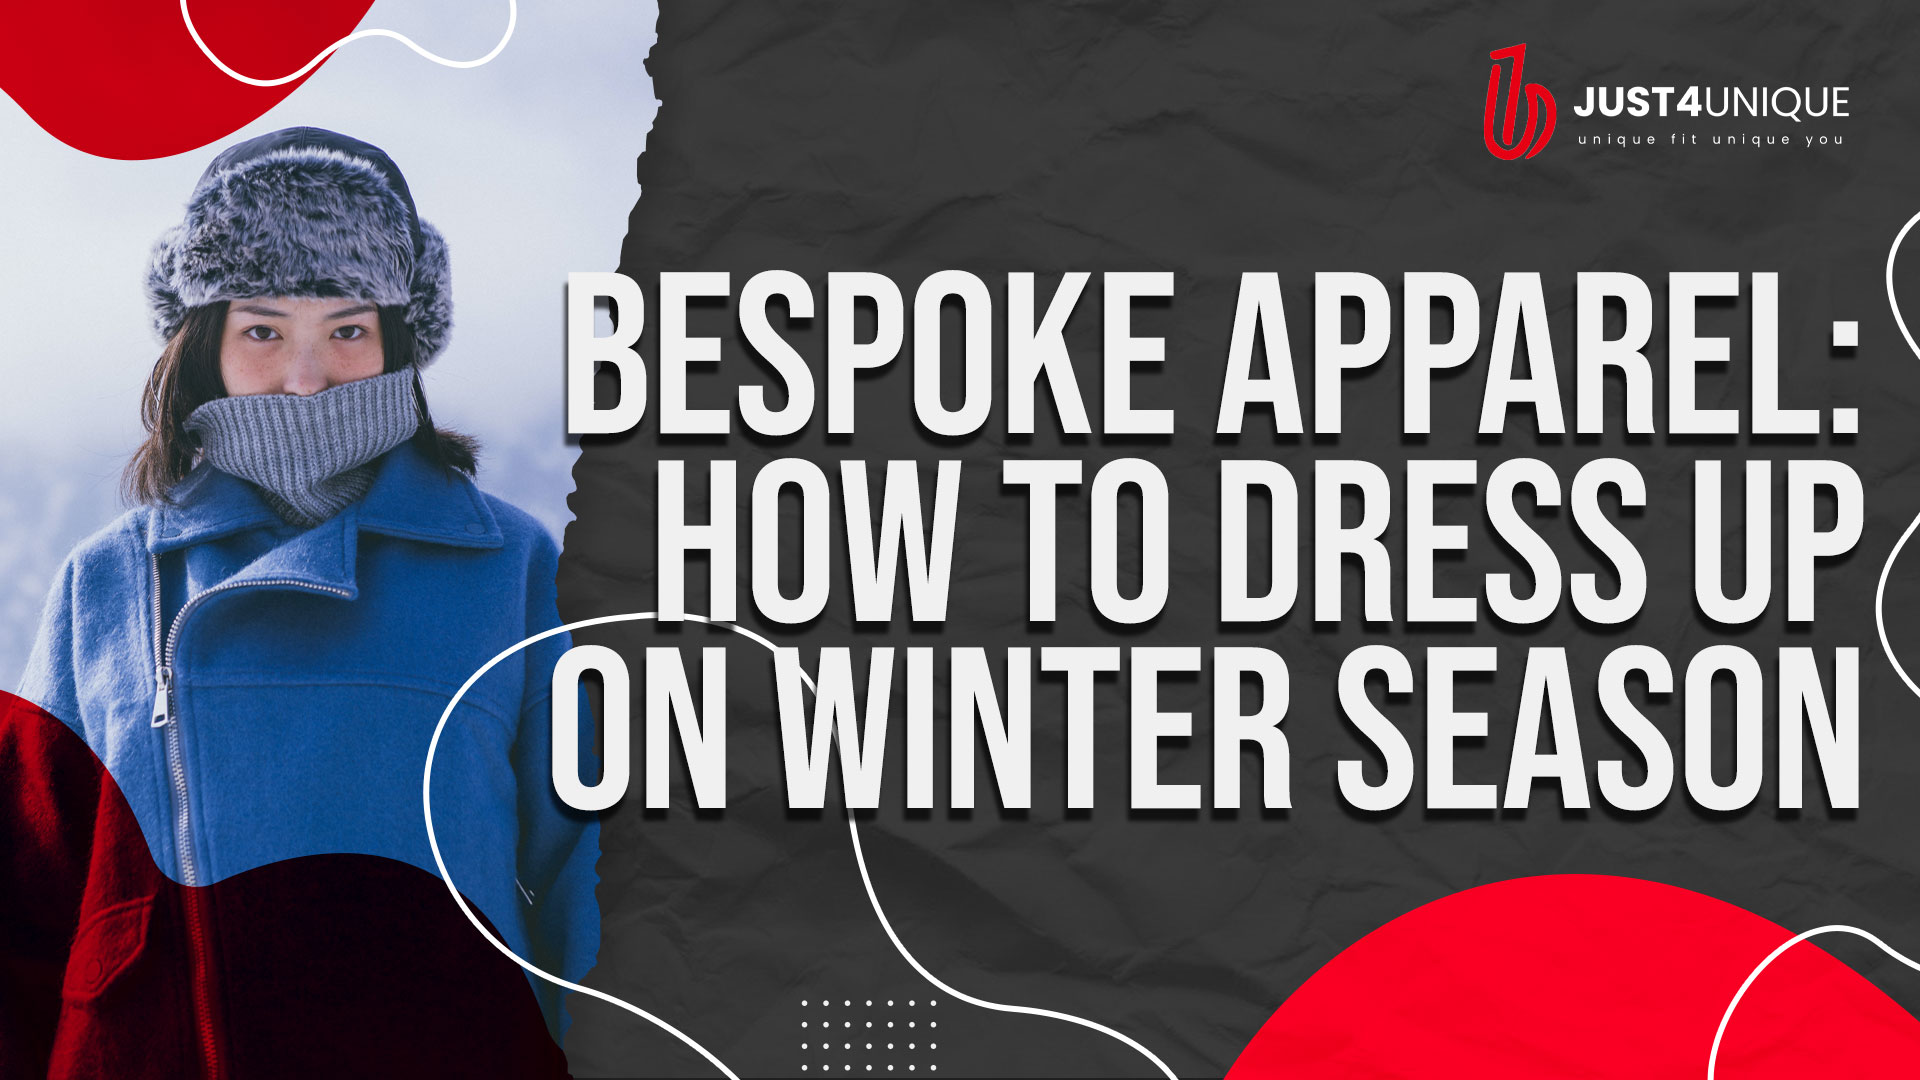 Bespoke Apparel: How To Dress Up On Winter Season